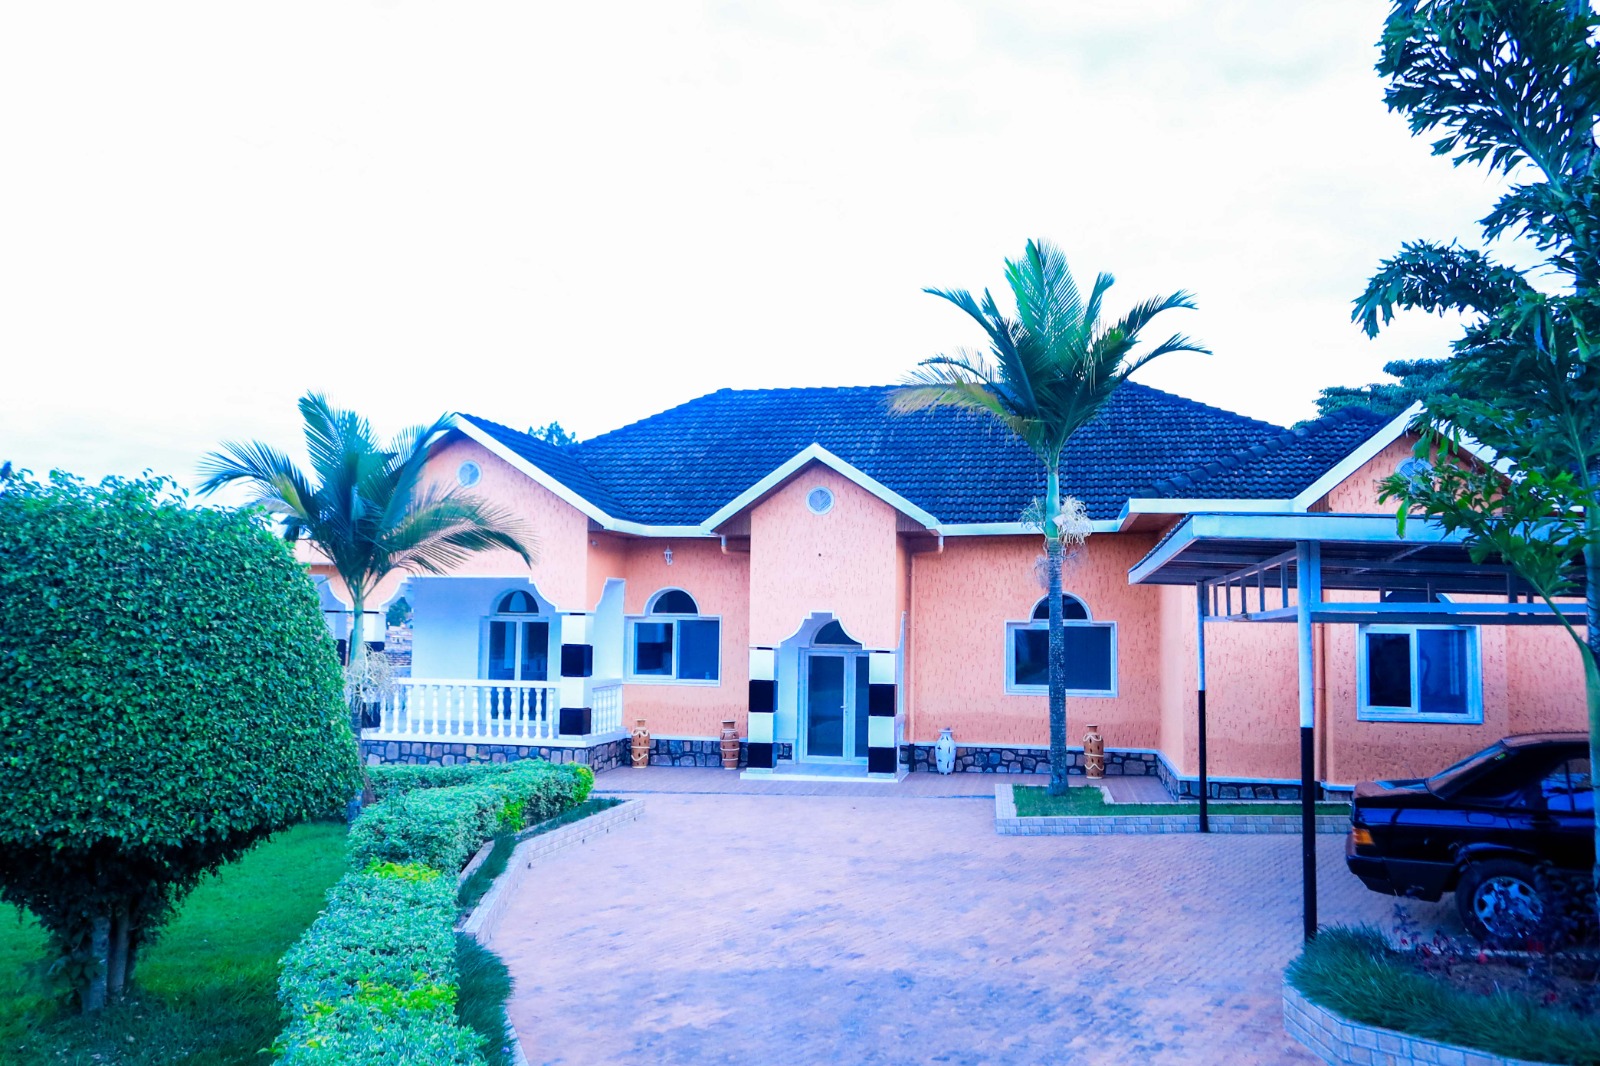 V100 Kimihurura Kimihurura-Rugando very nice unfurnished house for rent in Kigali Rwanda with Nice garden.Call/watsap +250788385831